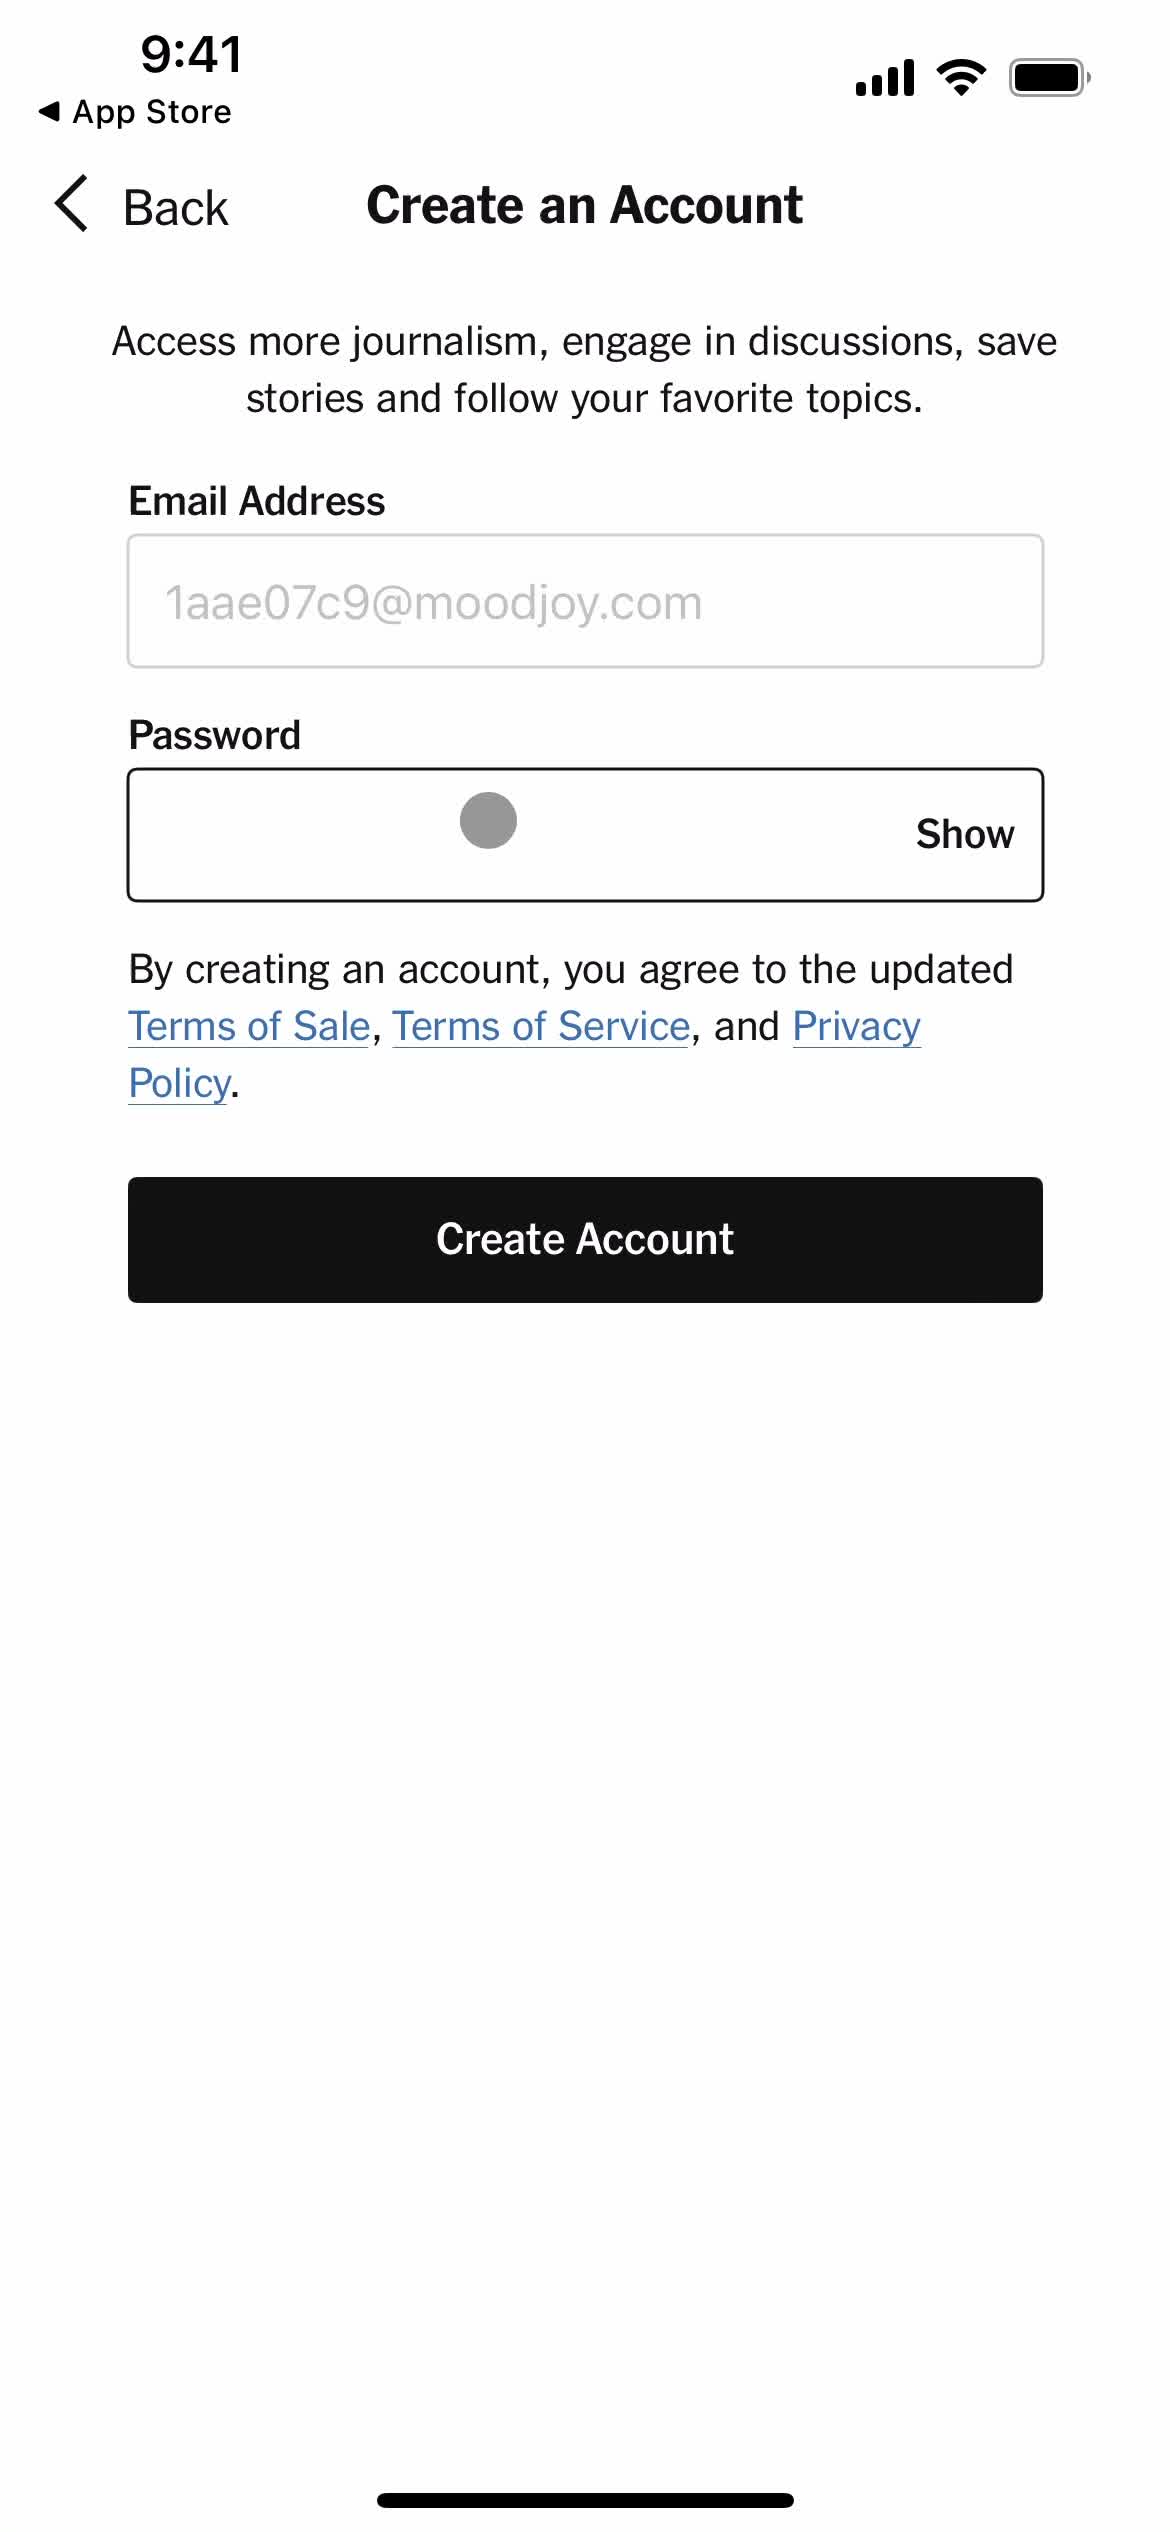 The New York Times enter password screenshot